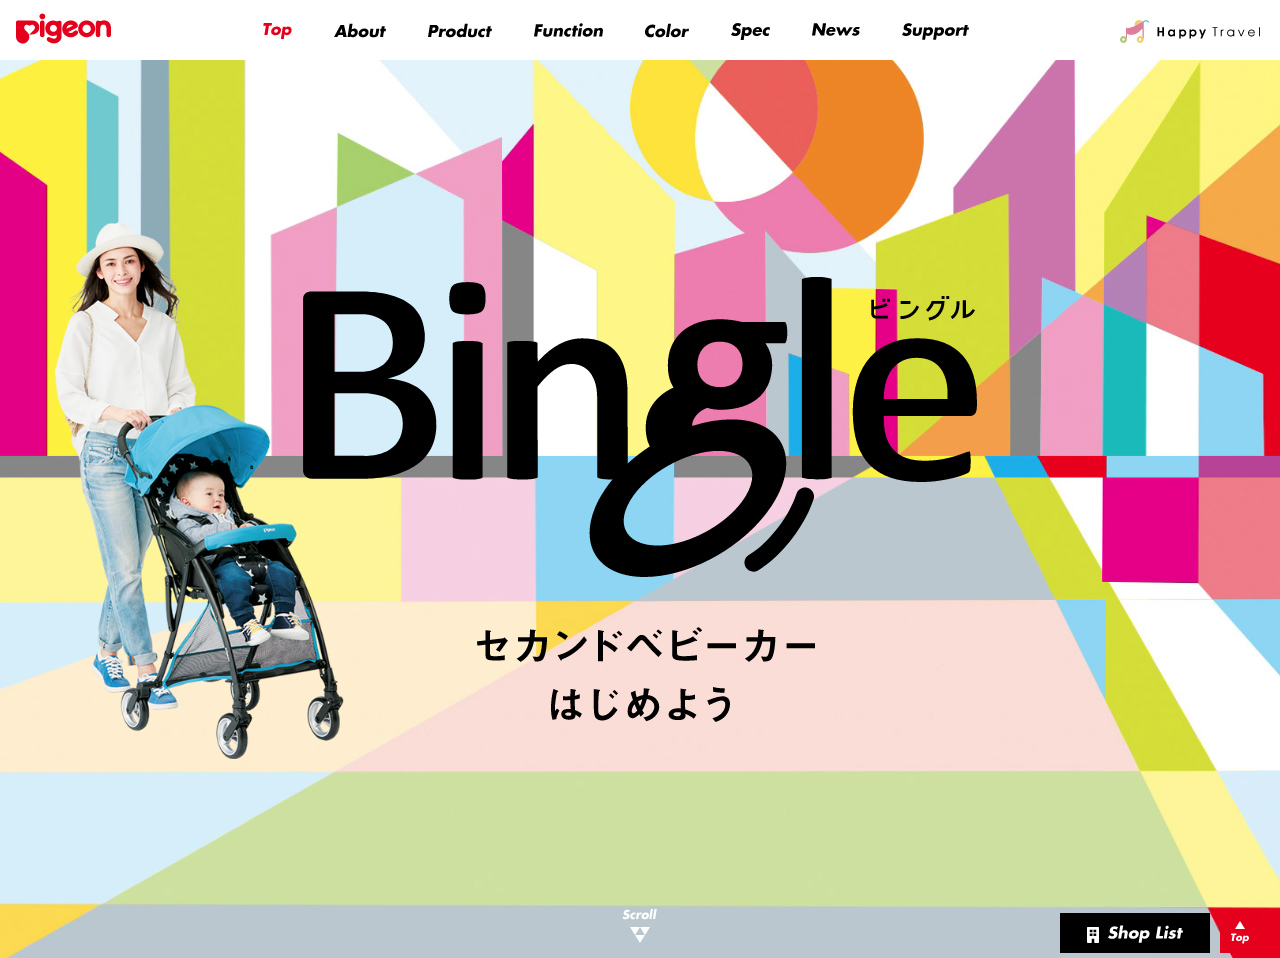 Bingle(ビングル) | ピジョンのベビーカー総合サイト Happy Travel | ピジョン